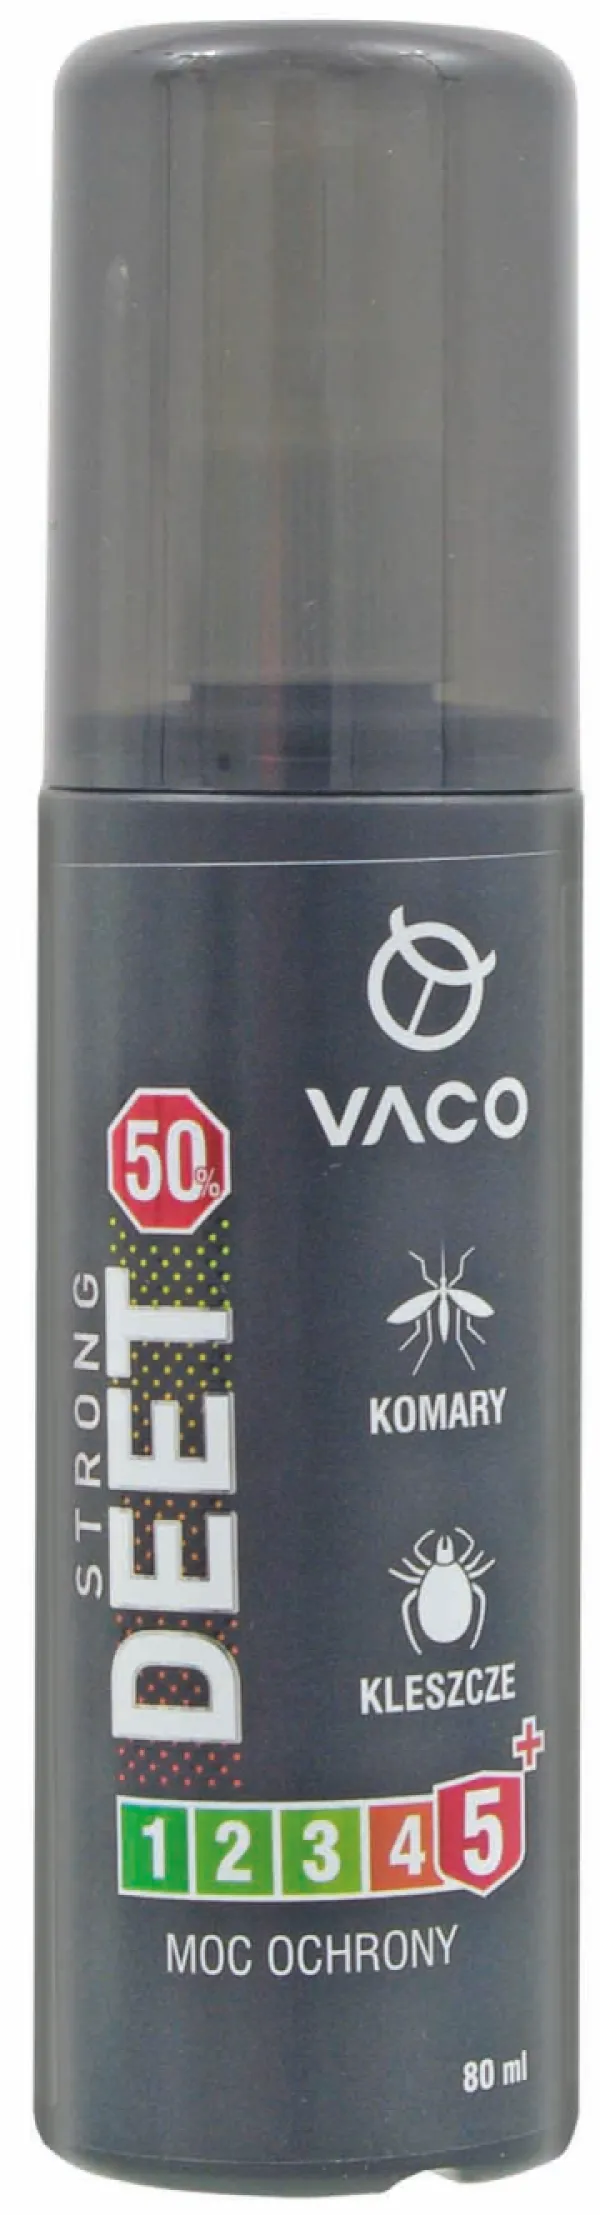 SNECI - Horgász webshop és horgászbolt - VACO Vaco Strong Spray 50% DEET Anti Insect + Geraniol 80ml